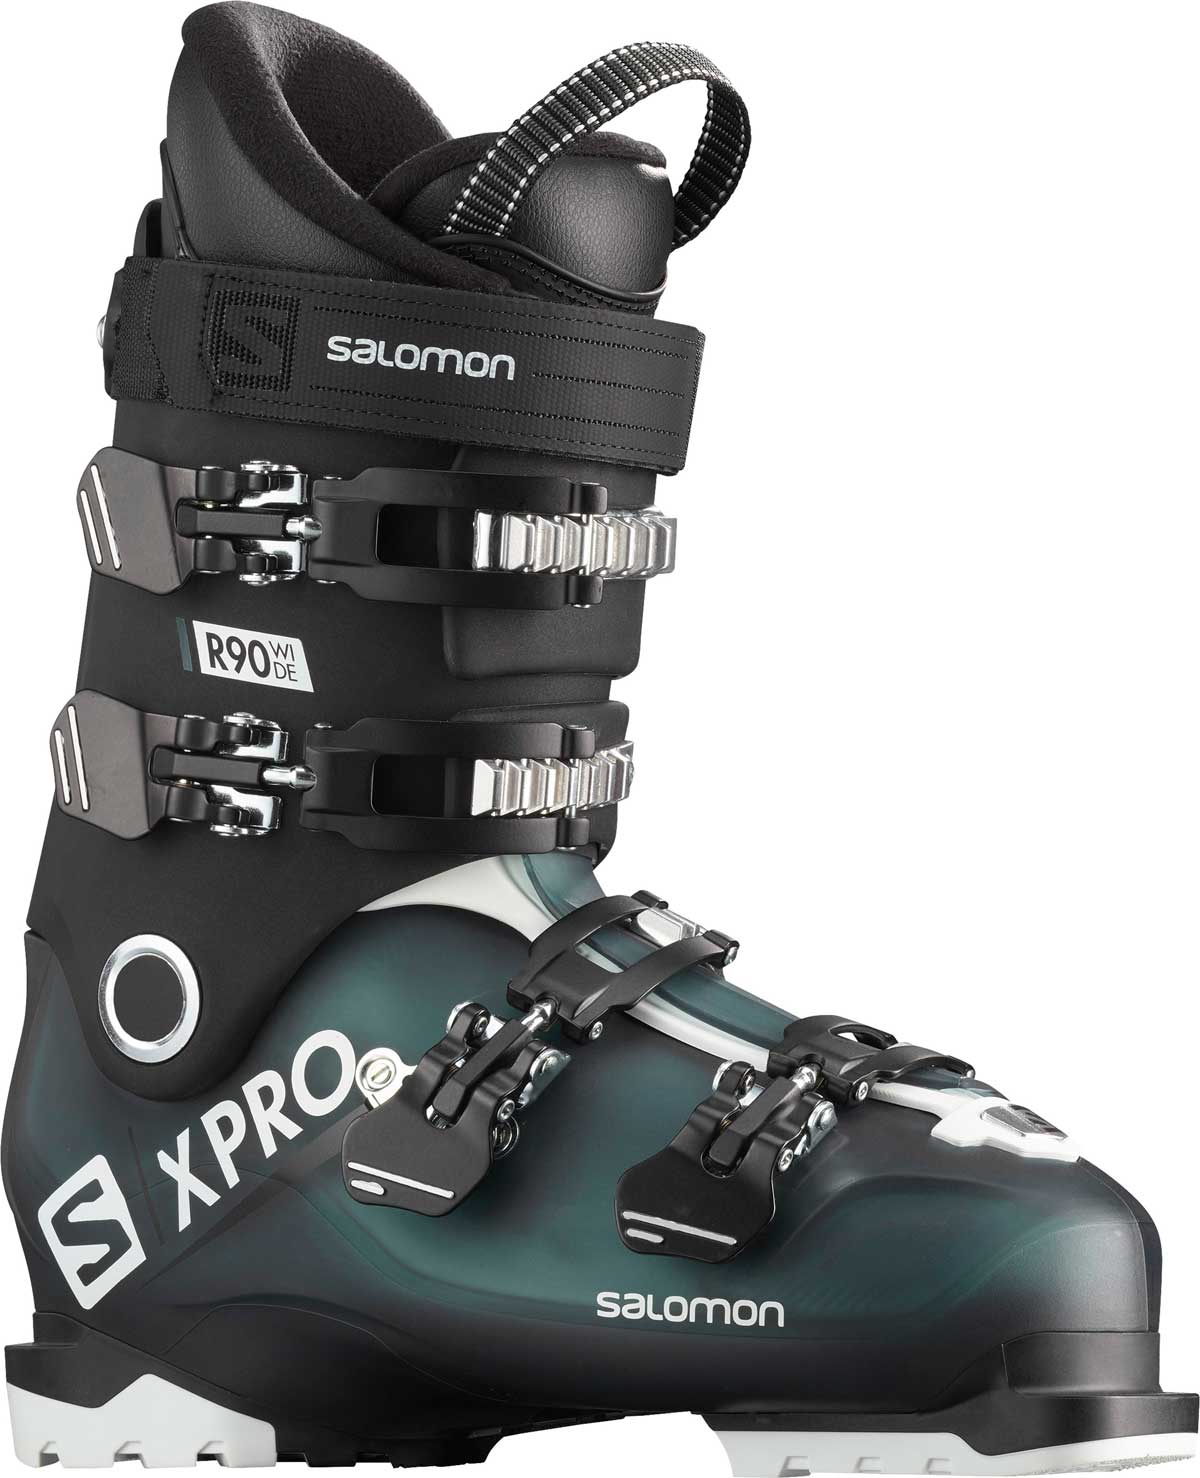 Salomon R90 Wide Ski 2019-2020 Ski Pro AZ